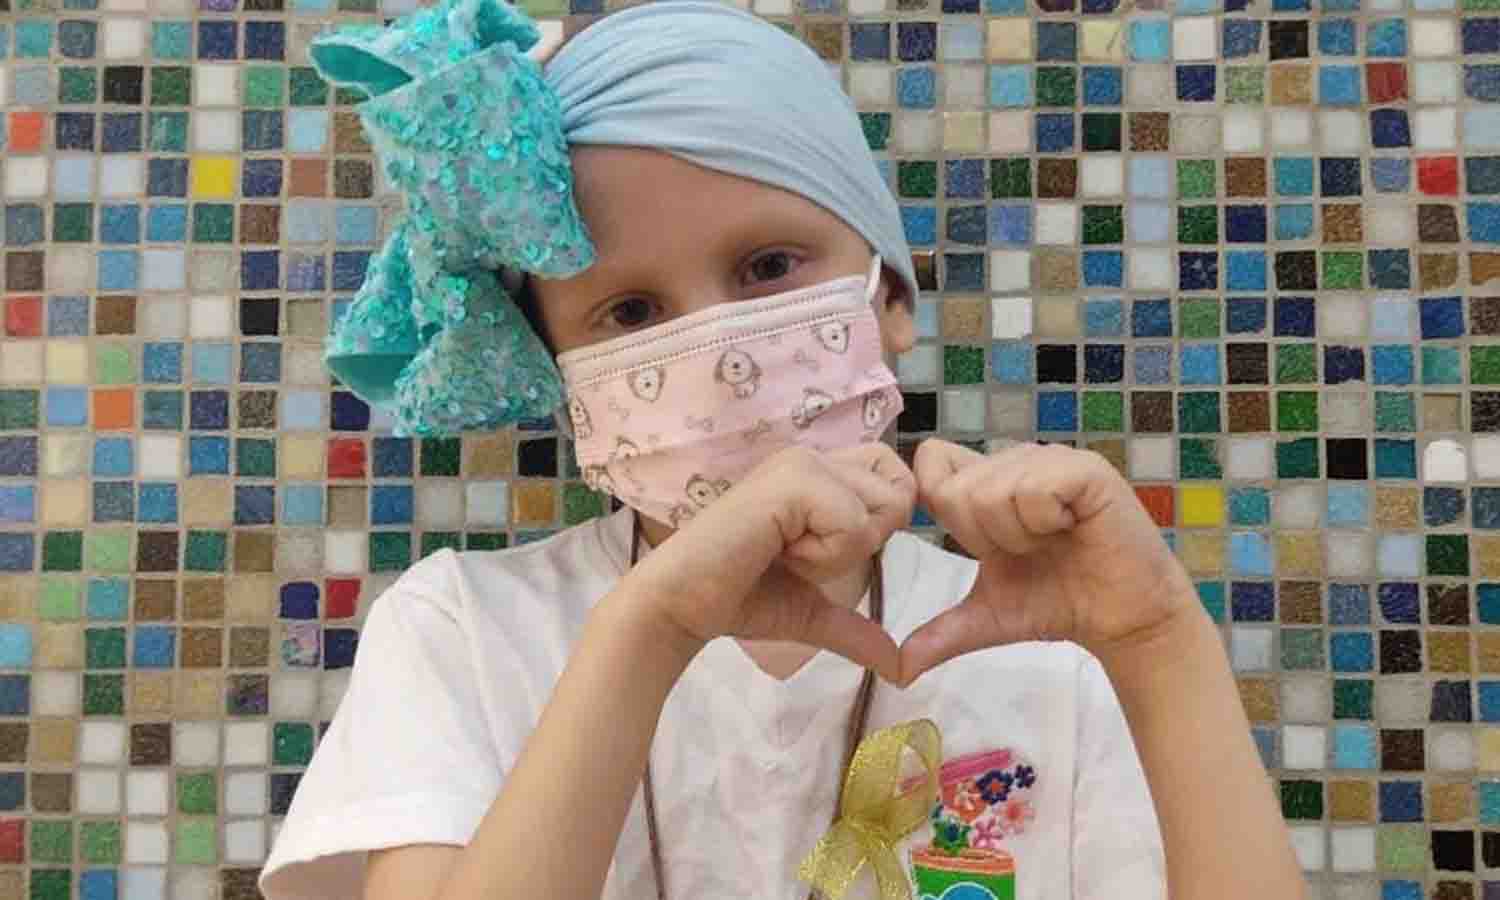  Zulia | Promueven campaña para detección temprana del cáncer infantil